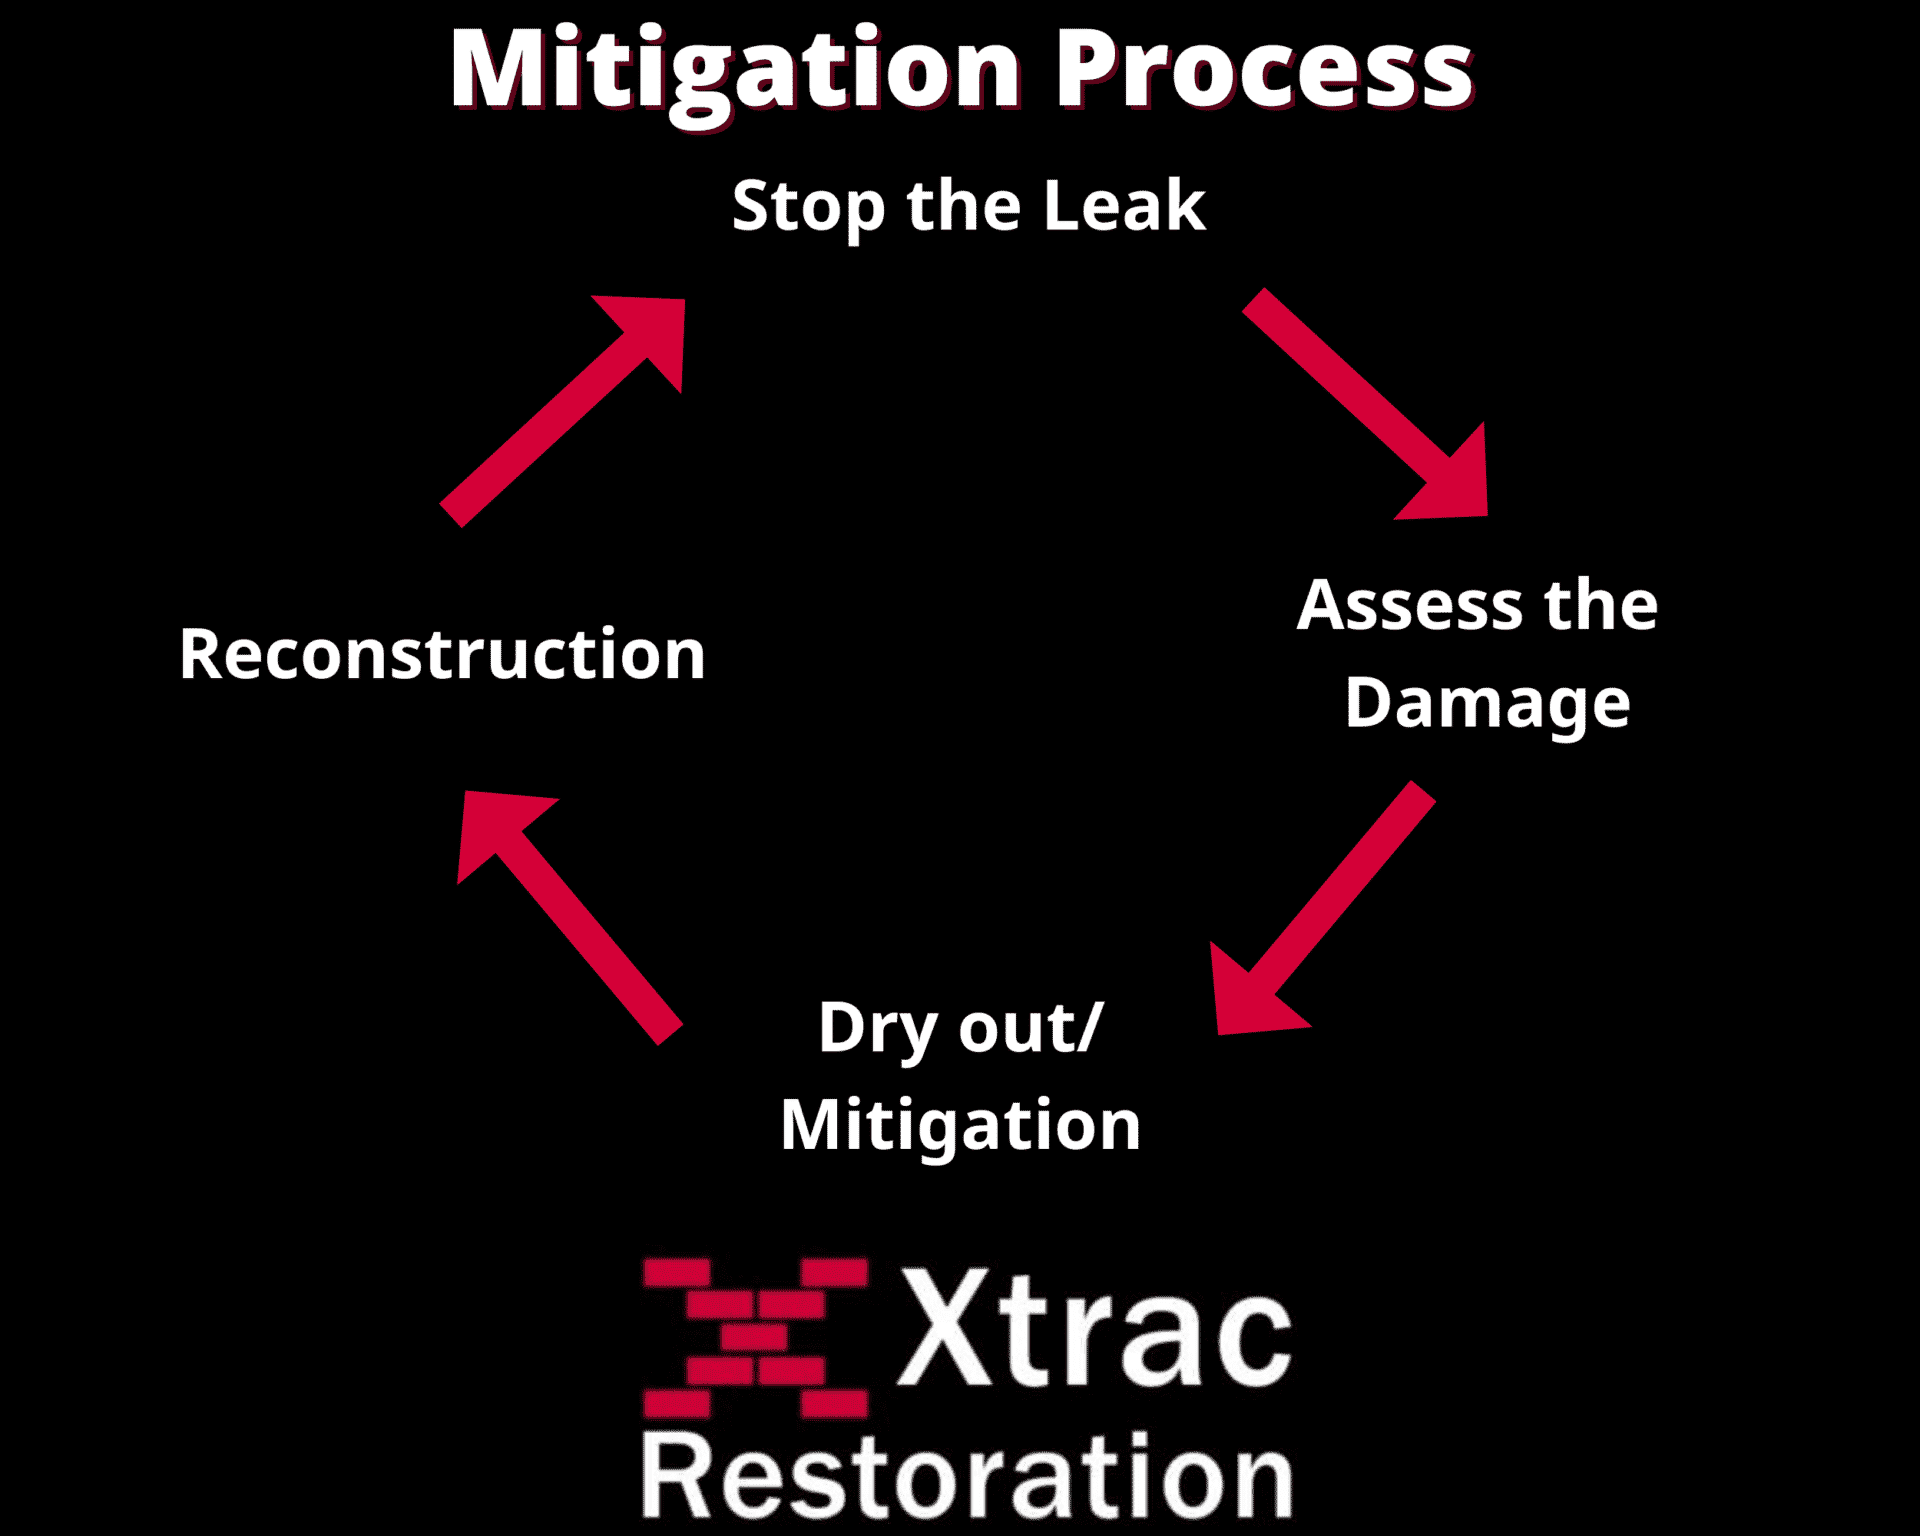 Water Damage Restoration Migration Process in Houston, TX - Xtrac Restoration